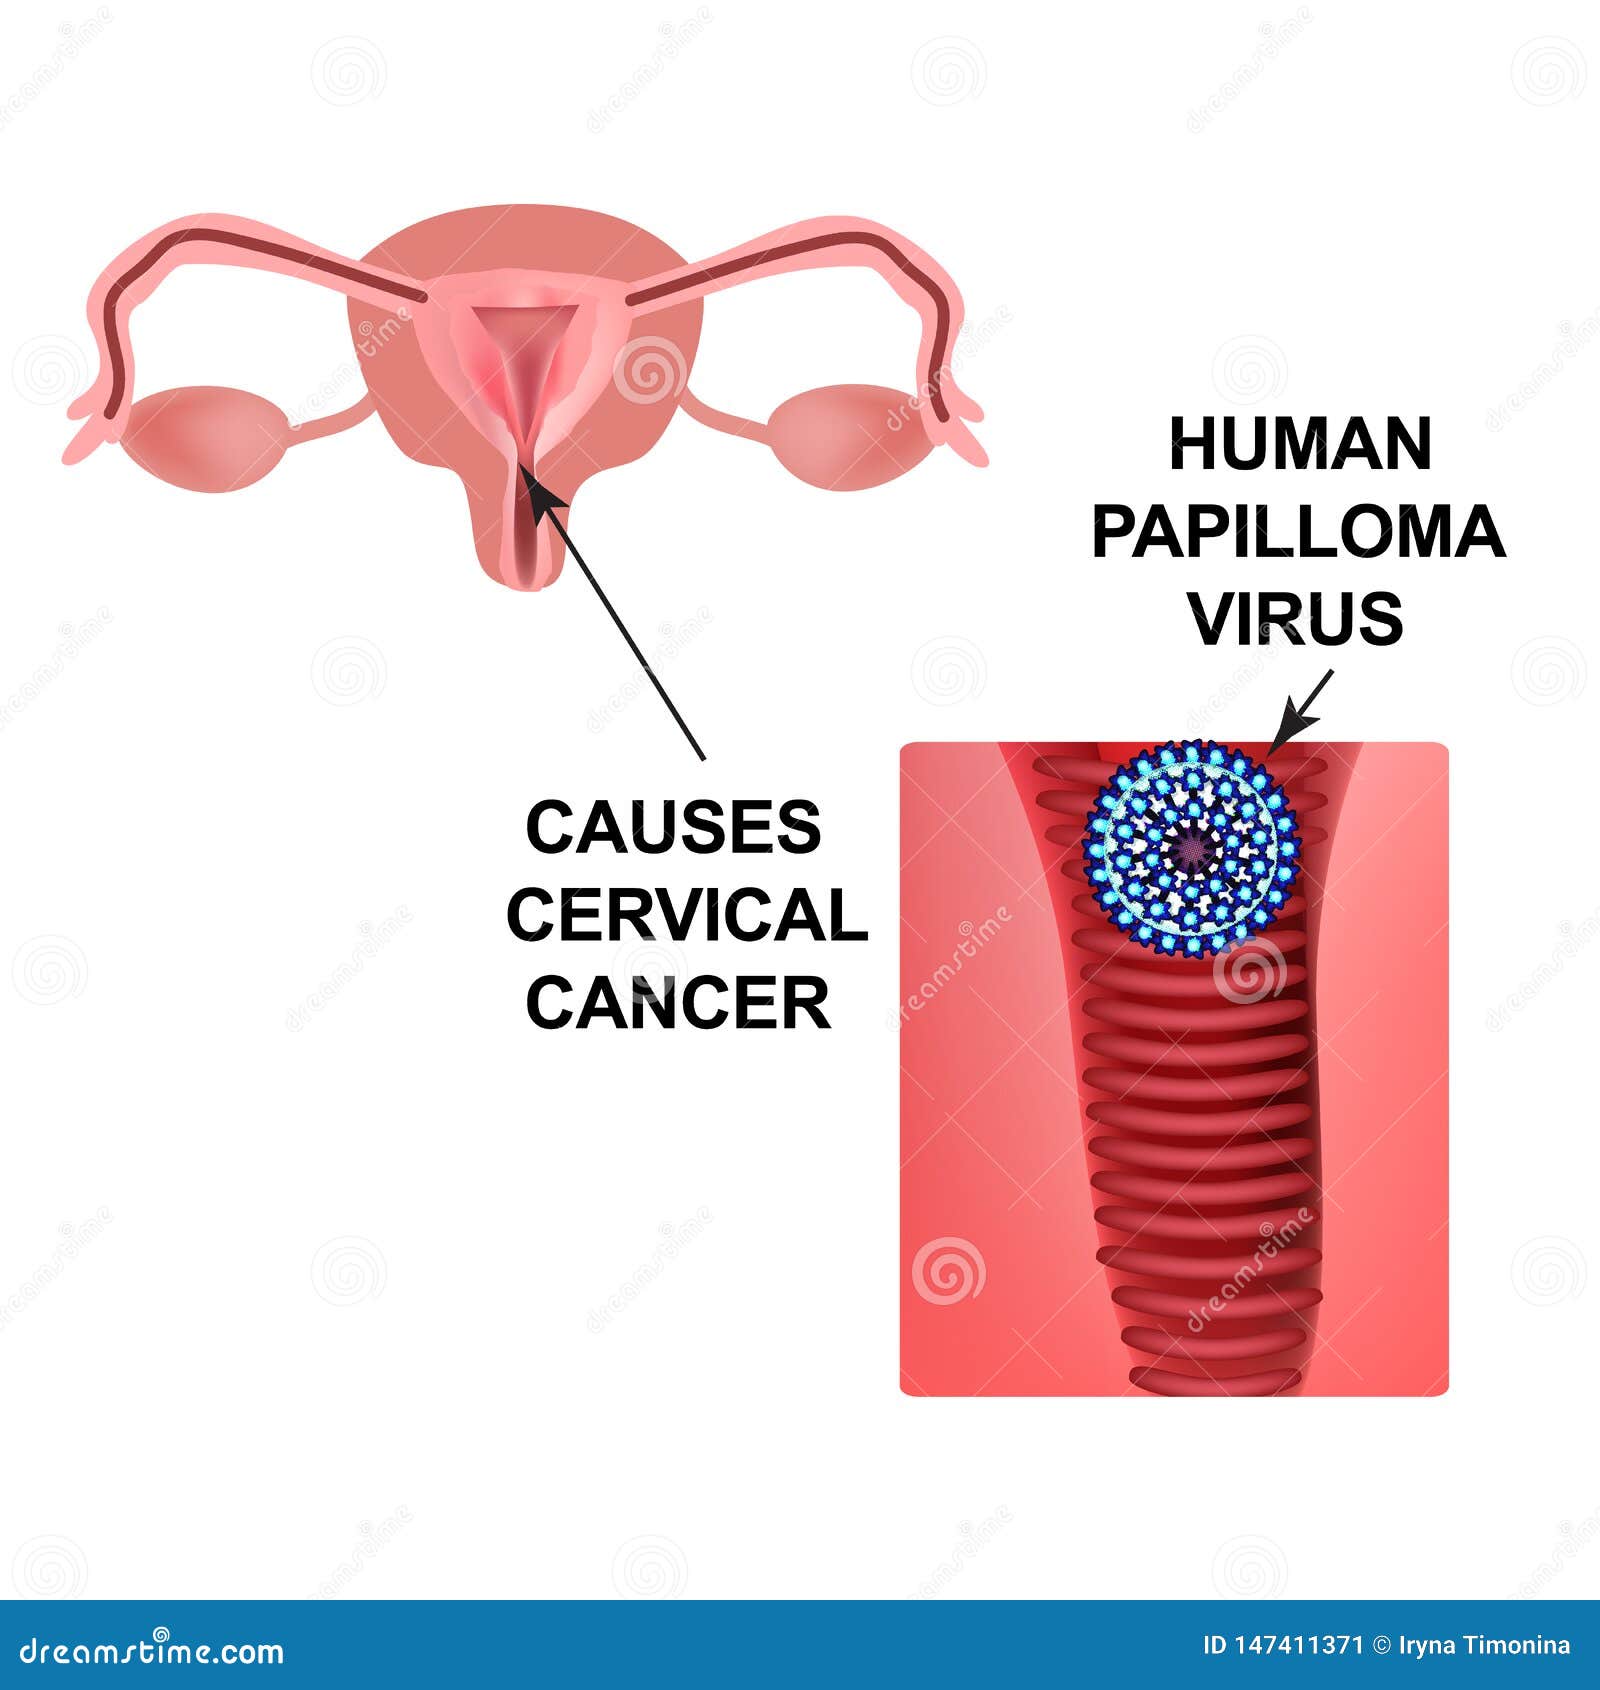 papillomatosis and cancer